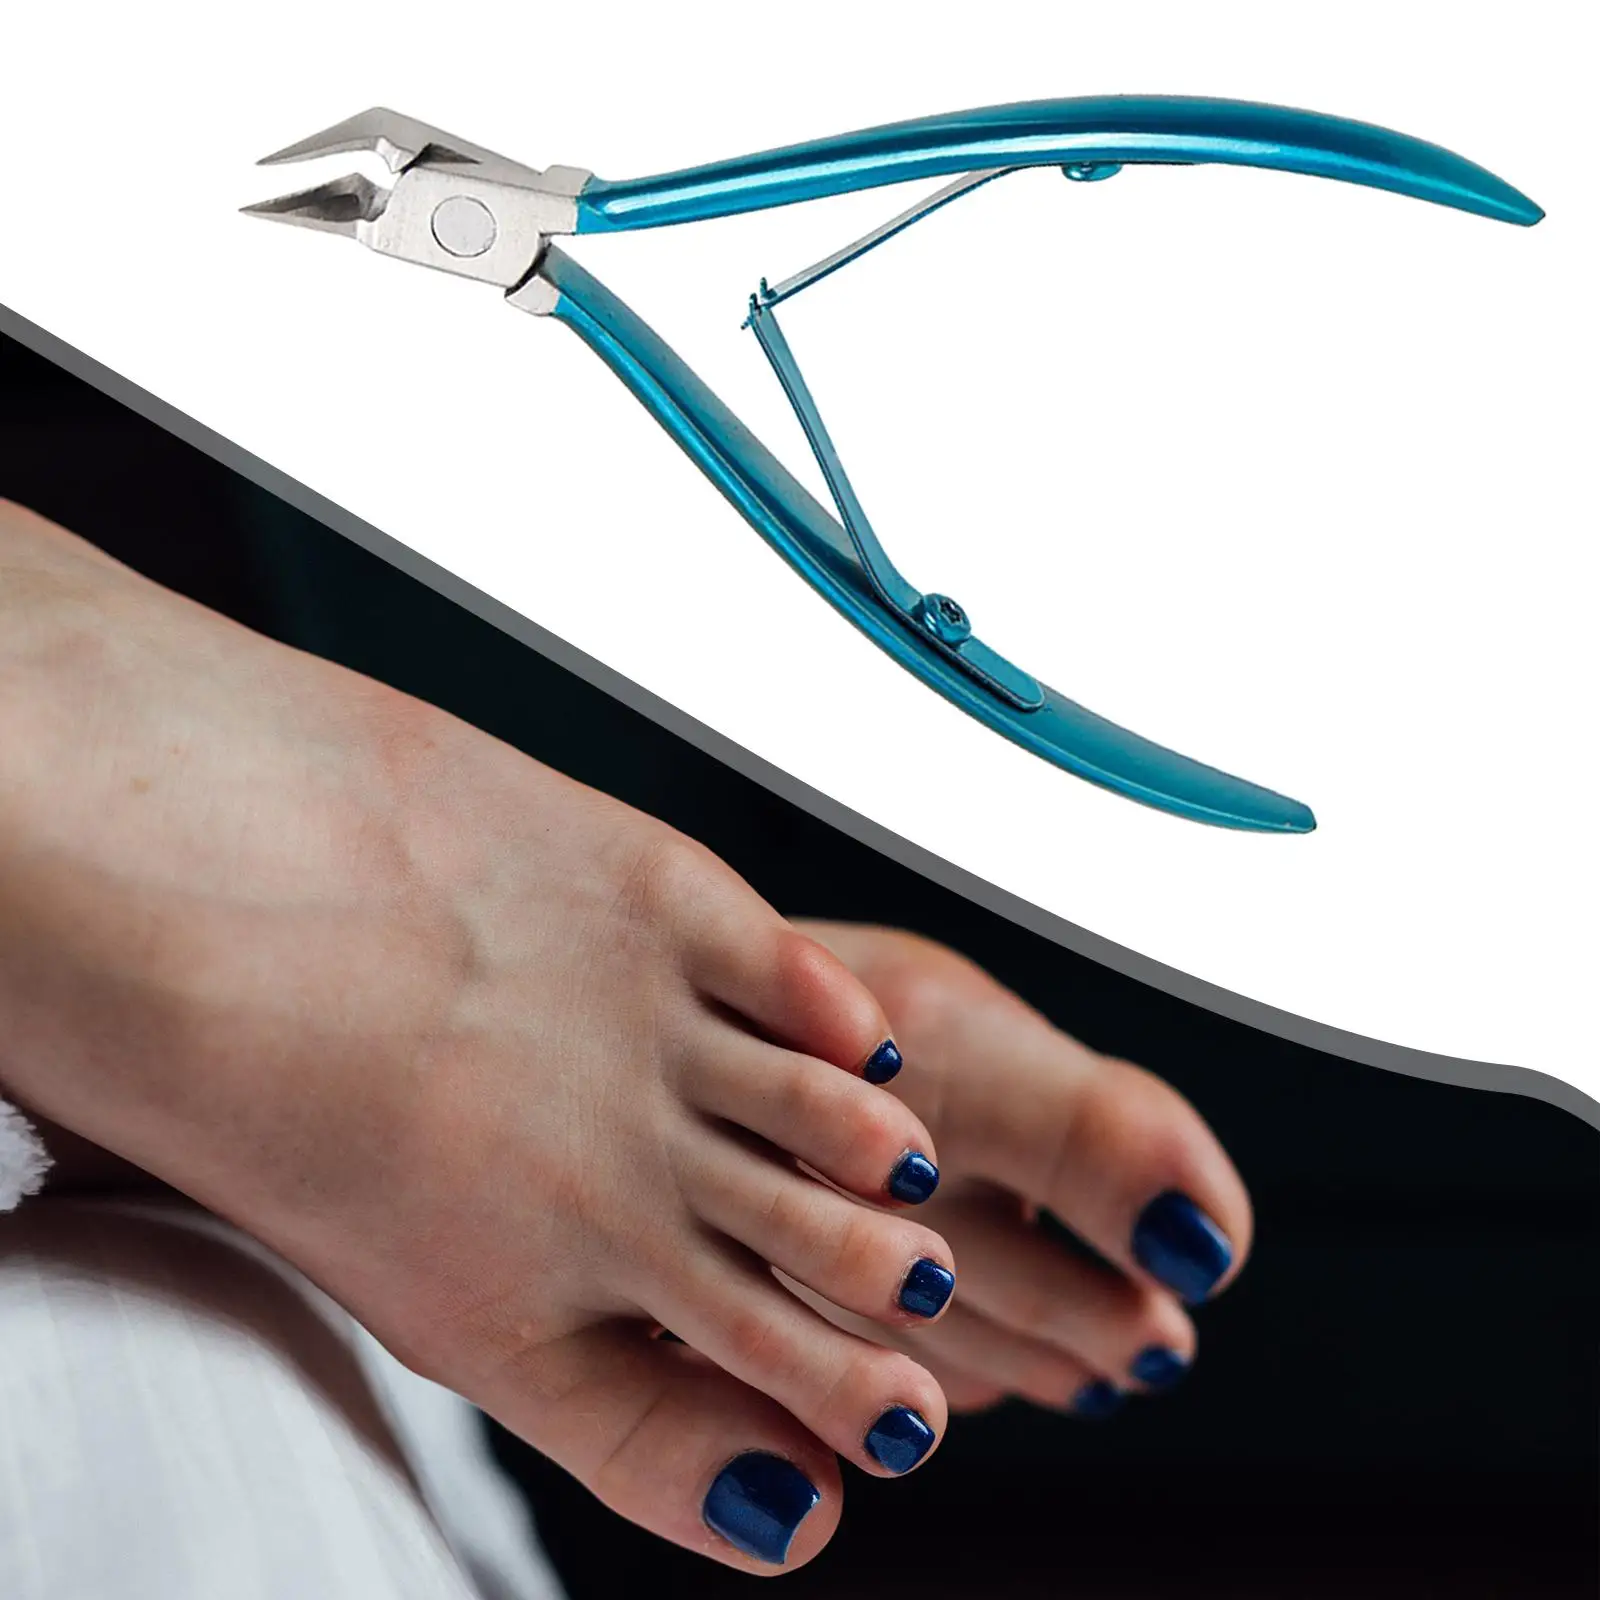 Ingrown Toenail clippers Precision Nail scissors Durable for Ingrown Toenail Treatment